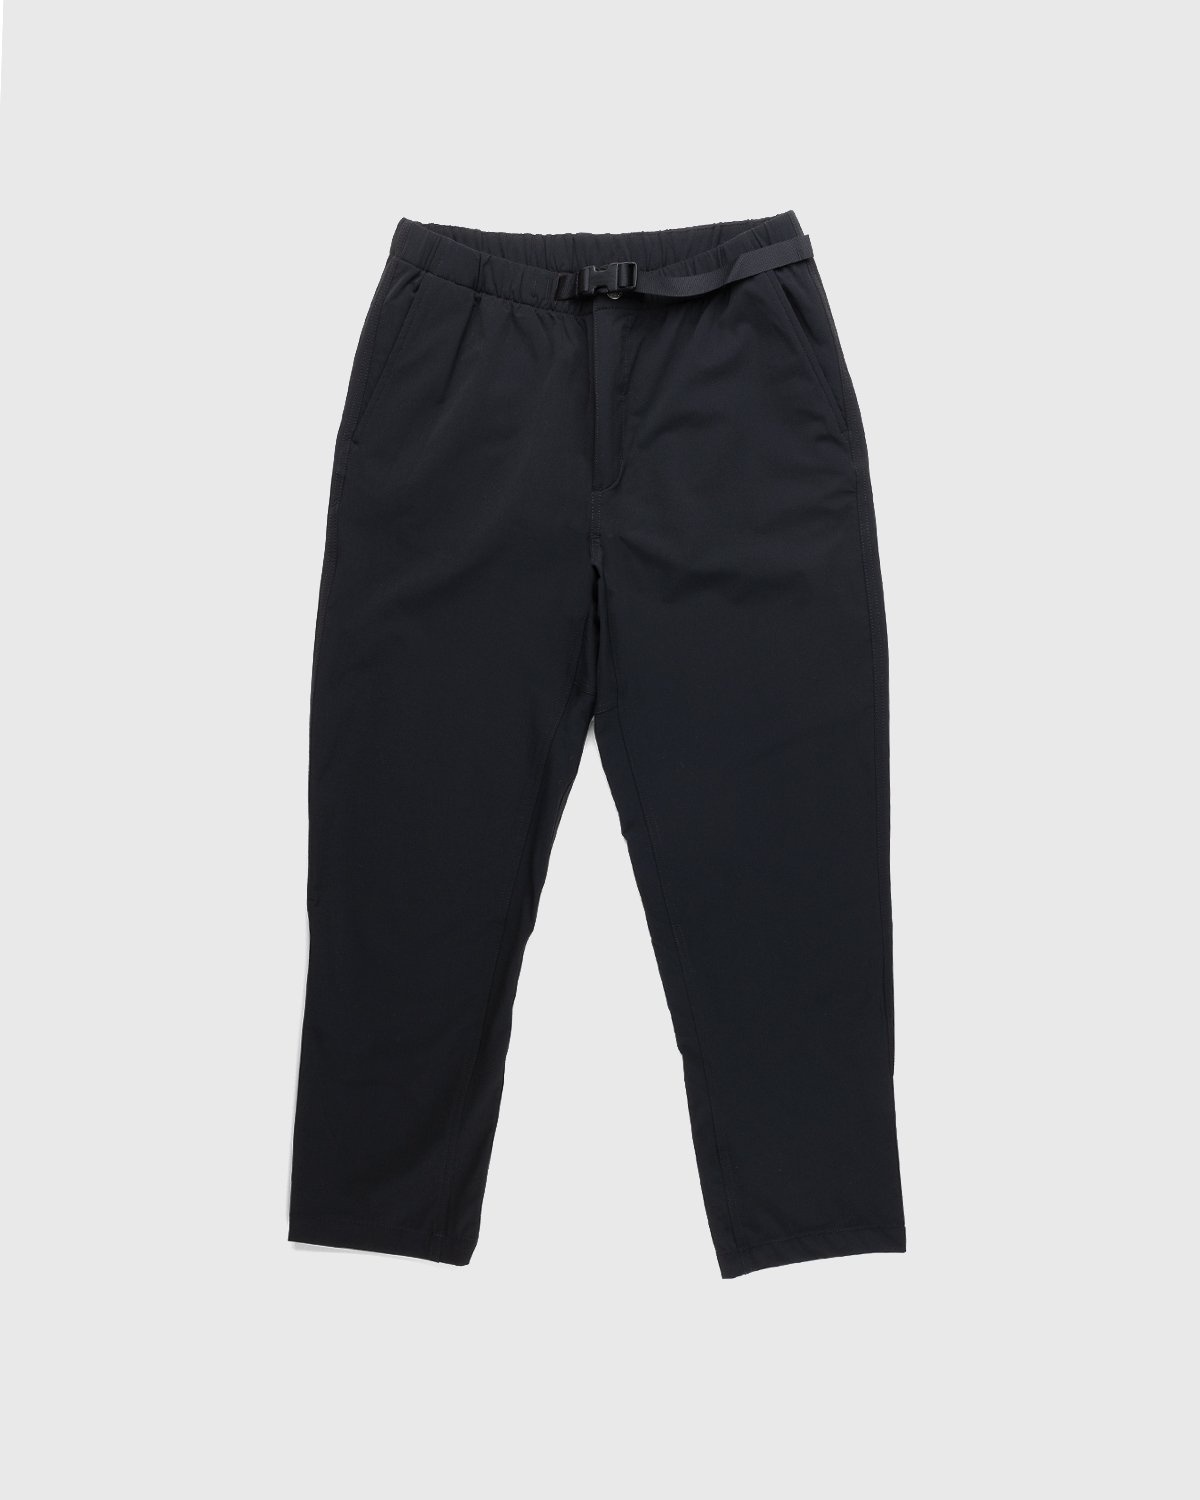 The North Face – Tech Easy Pant Black - Pants - Black - Image 1